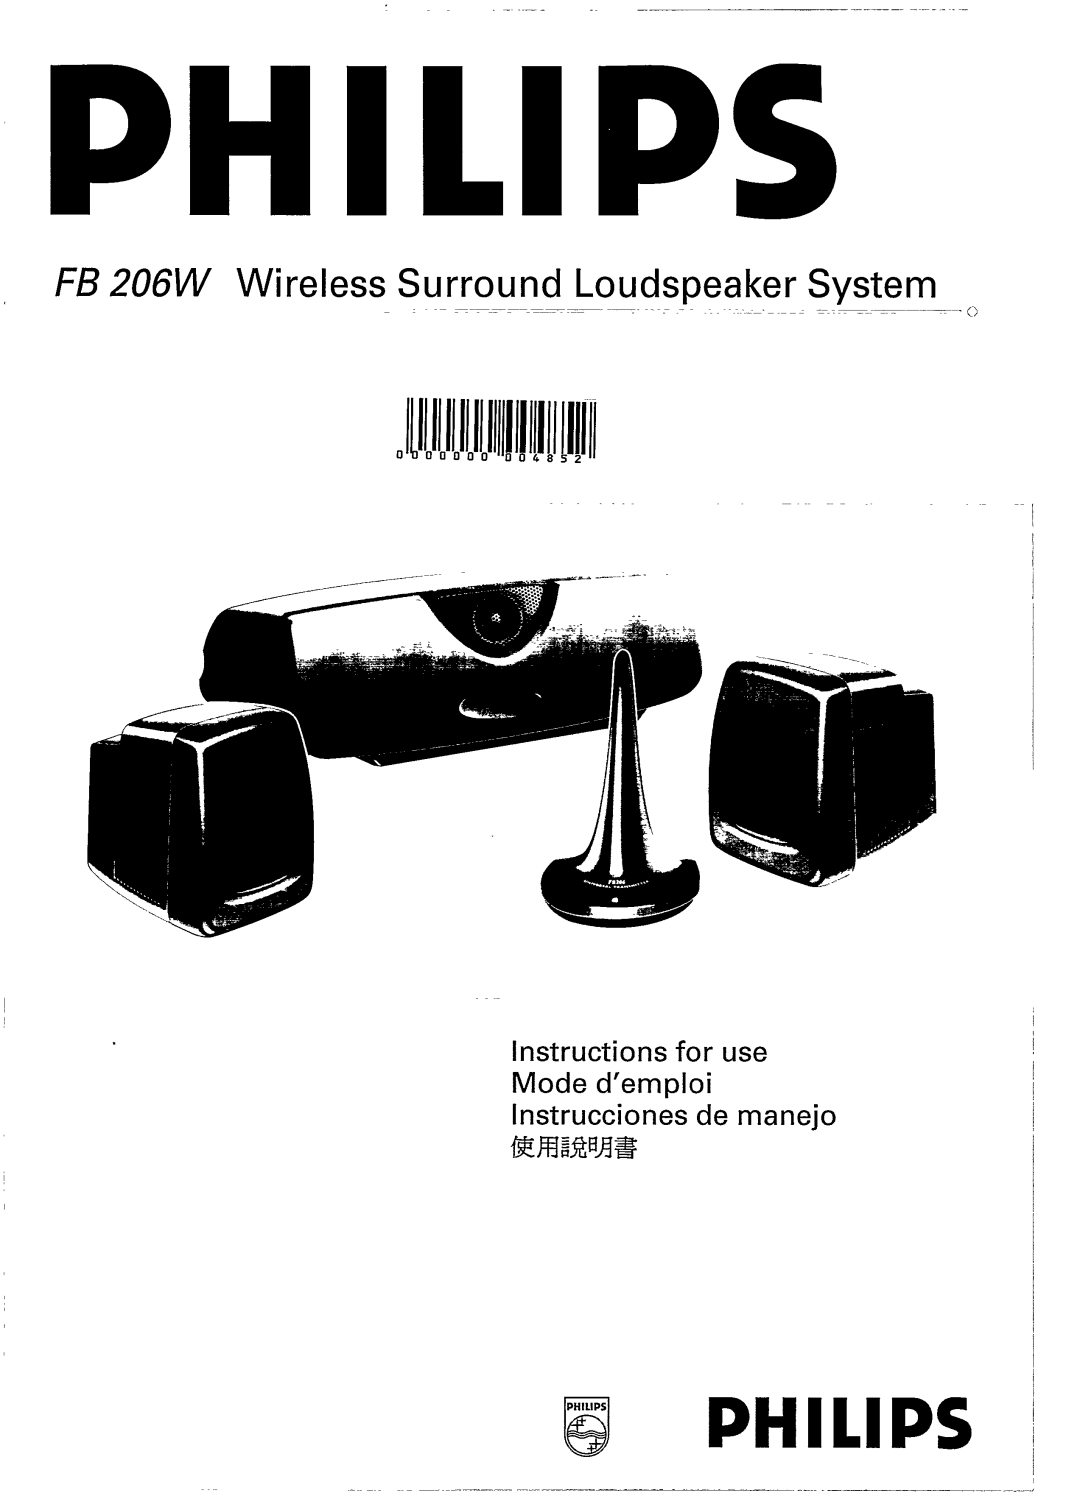 Philips FB 206W manual 